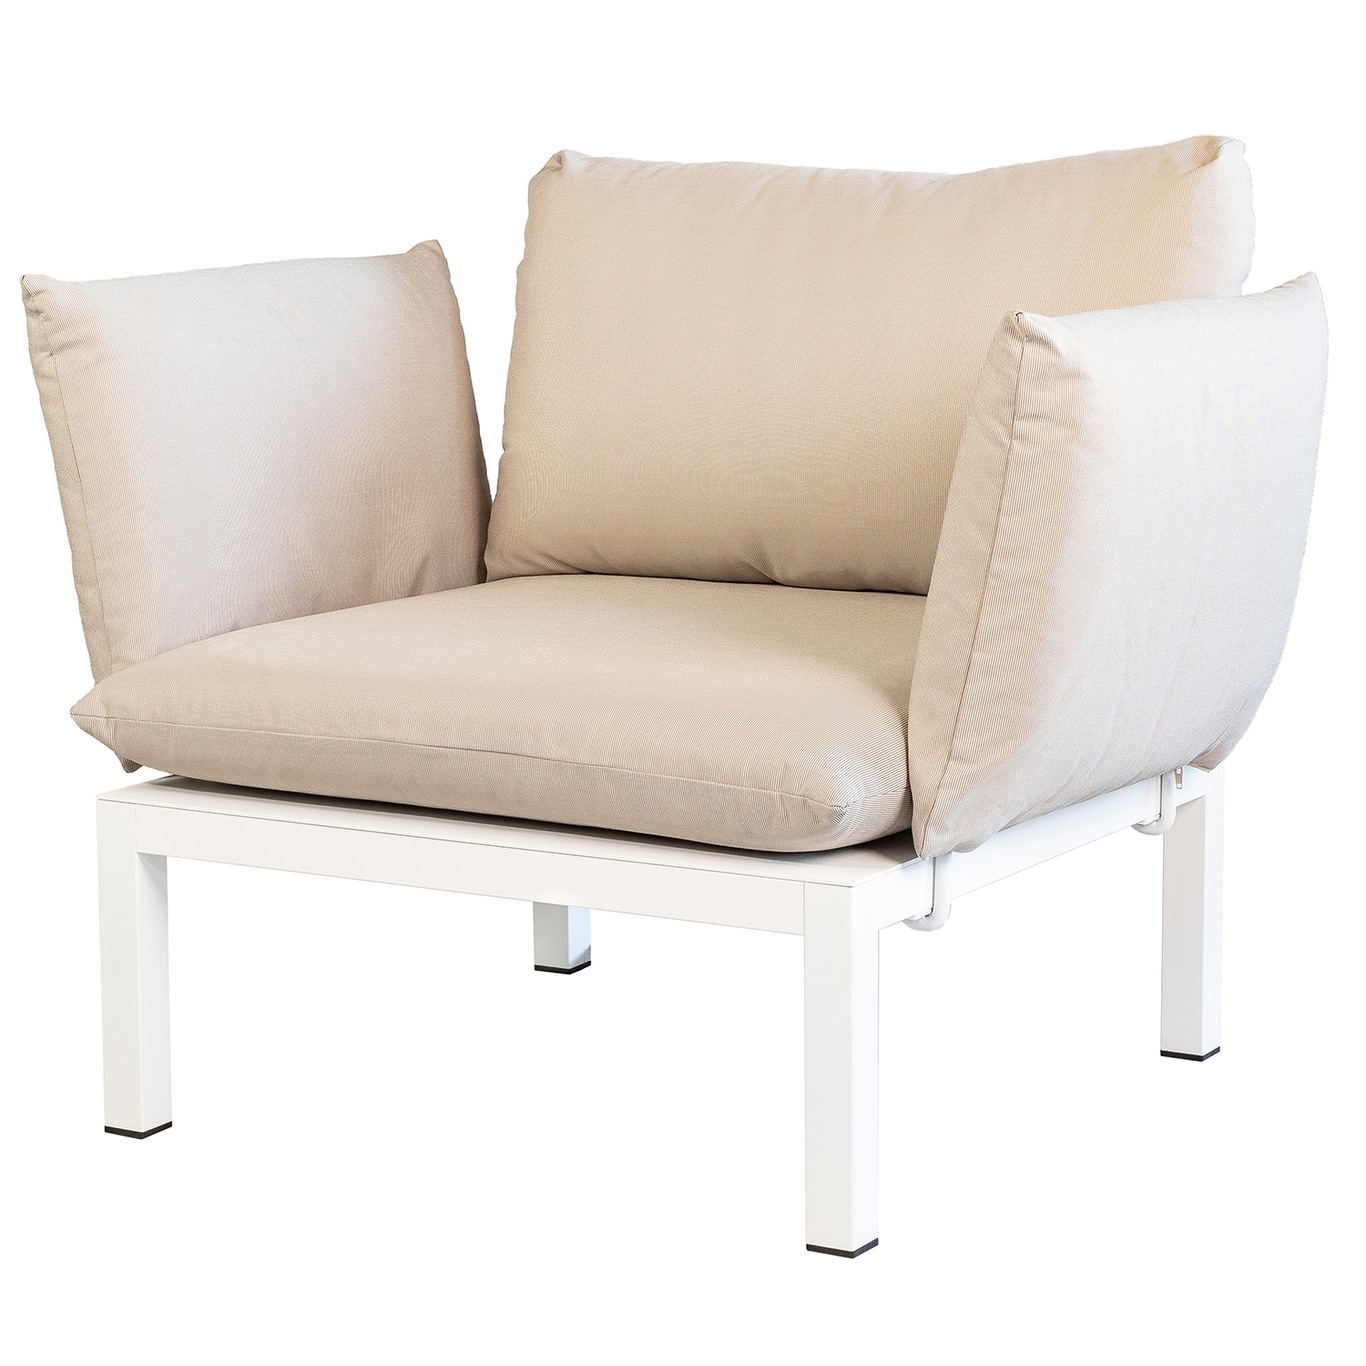 Domino, set of 2 armrests cushions, beige